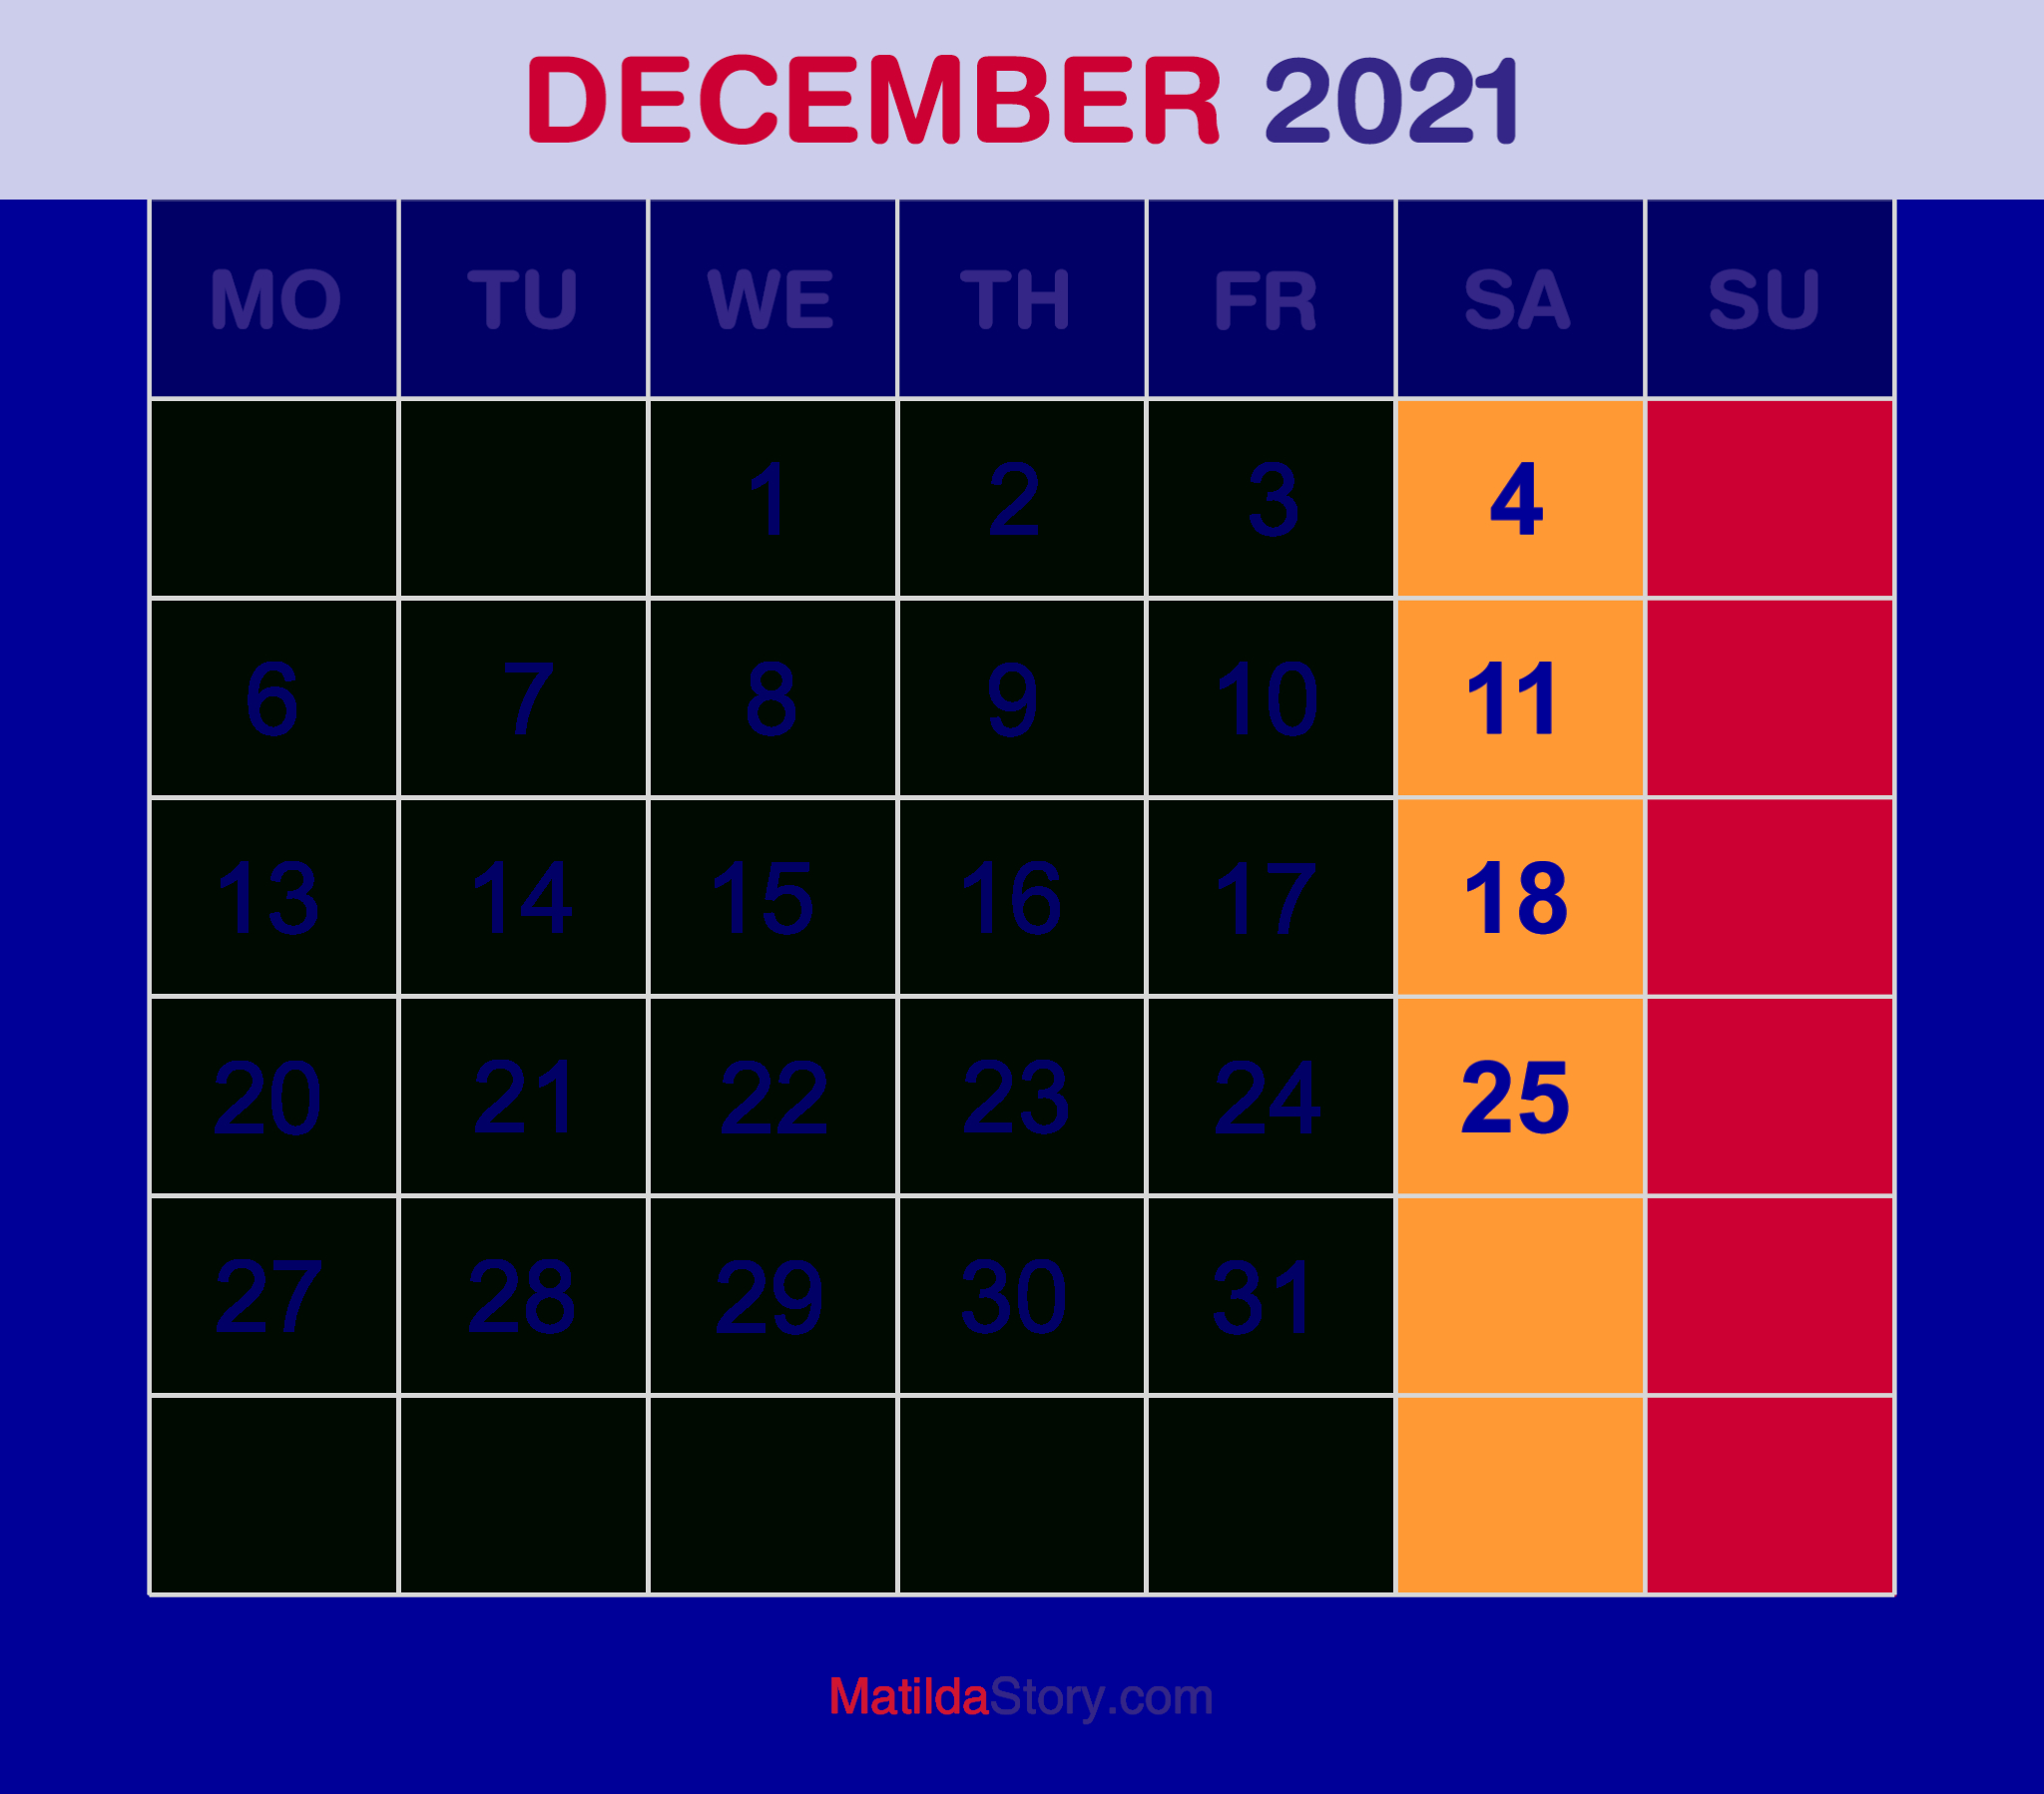 December 2021 Monthly Calendar, Monthly Planner, Printable December 2021 Calendar Starting Monday